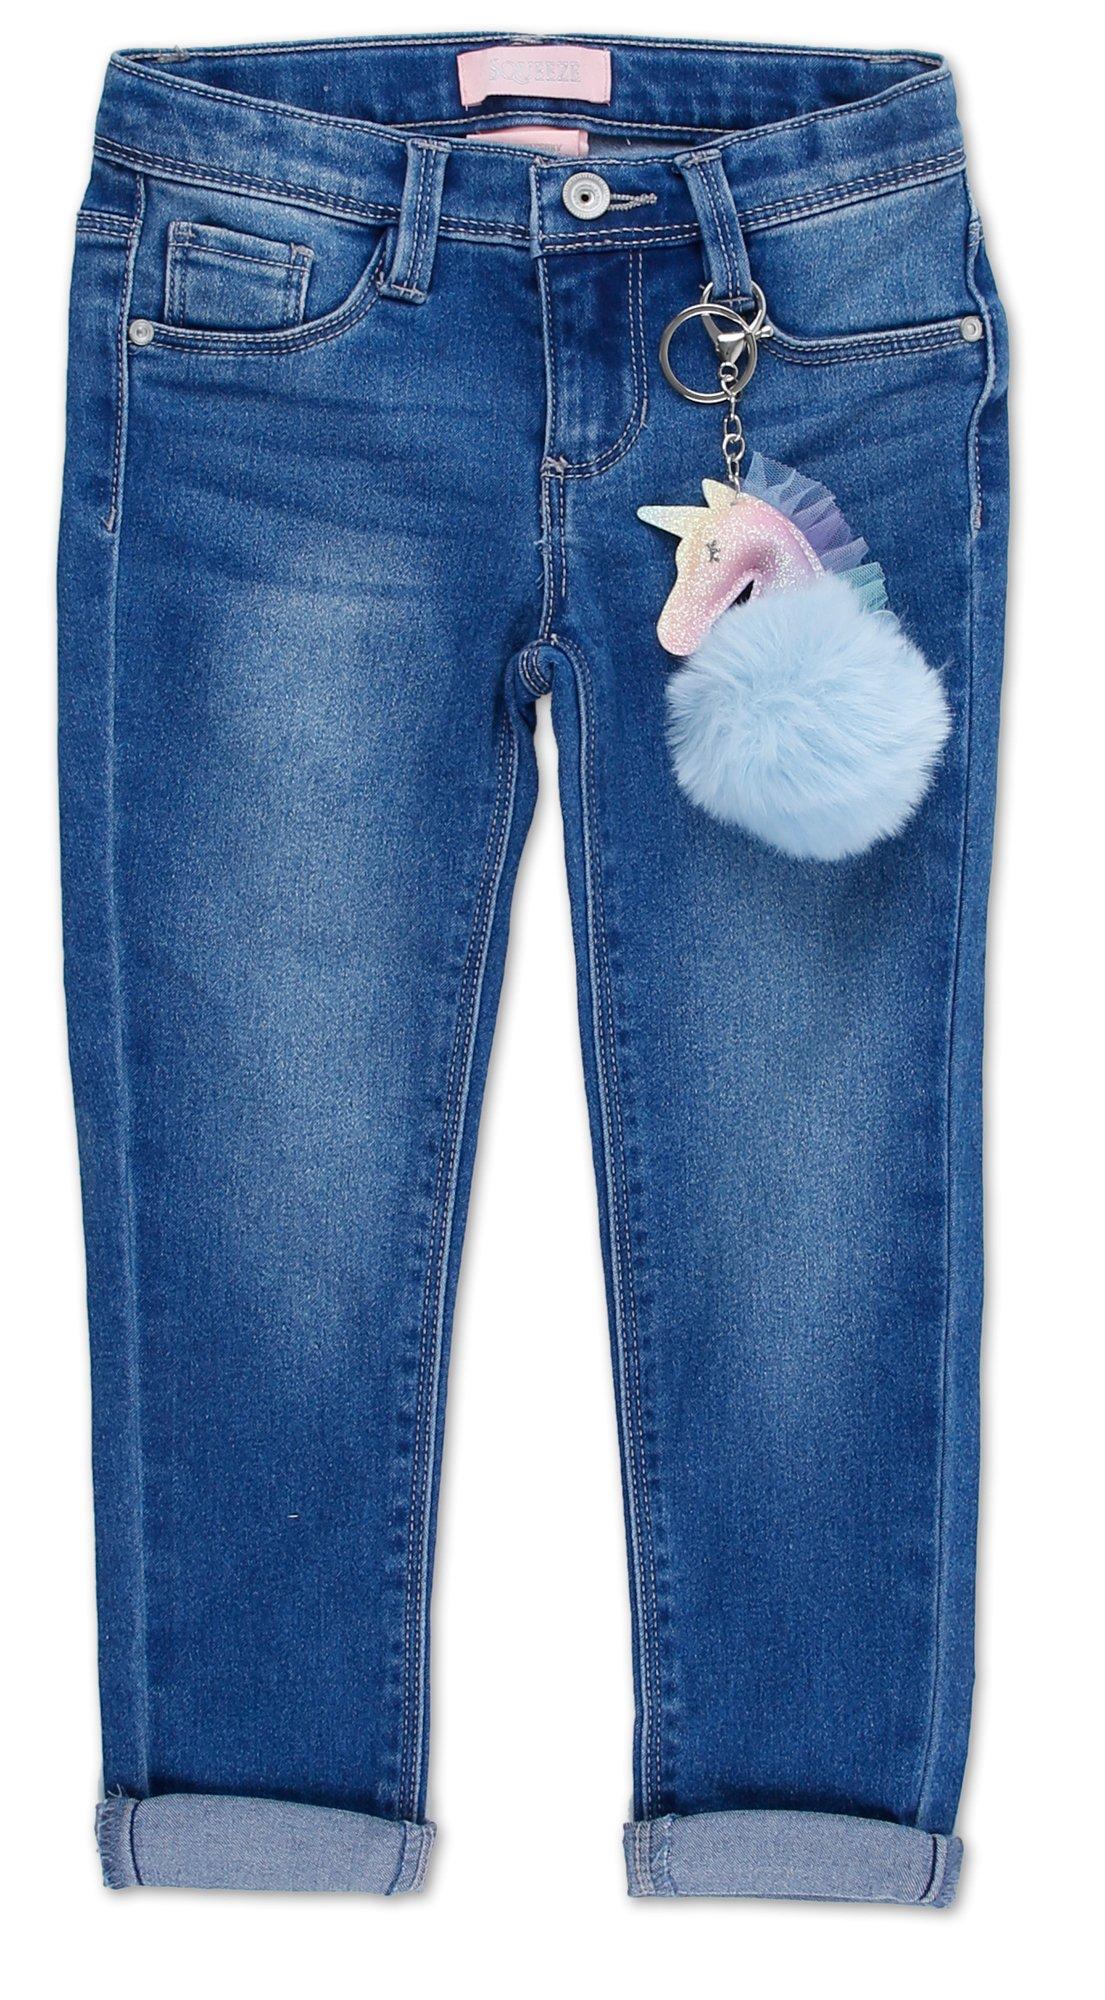 Little Girls Skinny Jeans & Unicorn Keychain